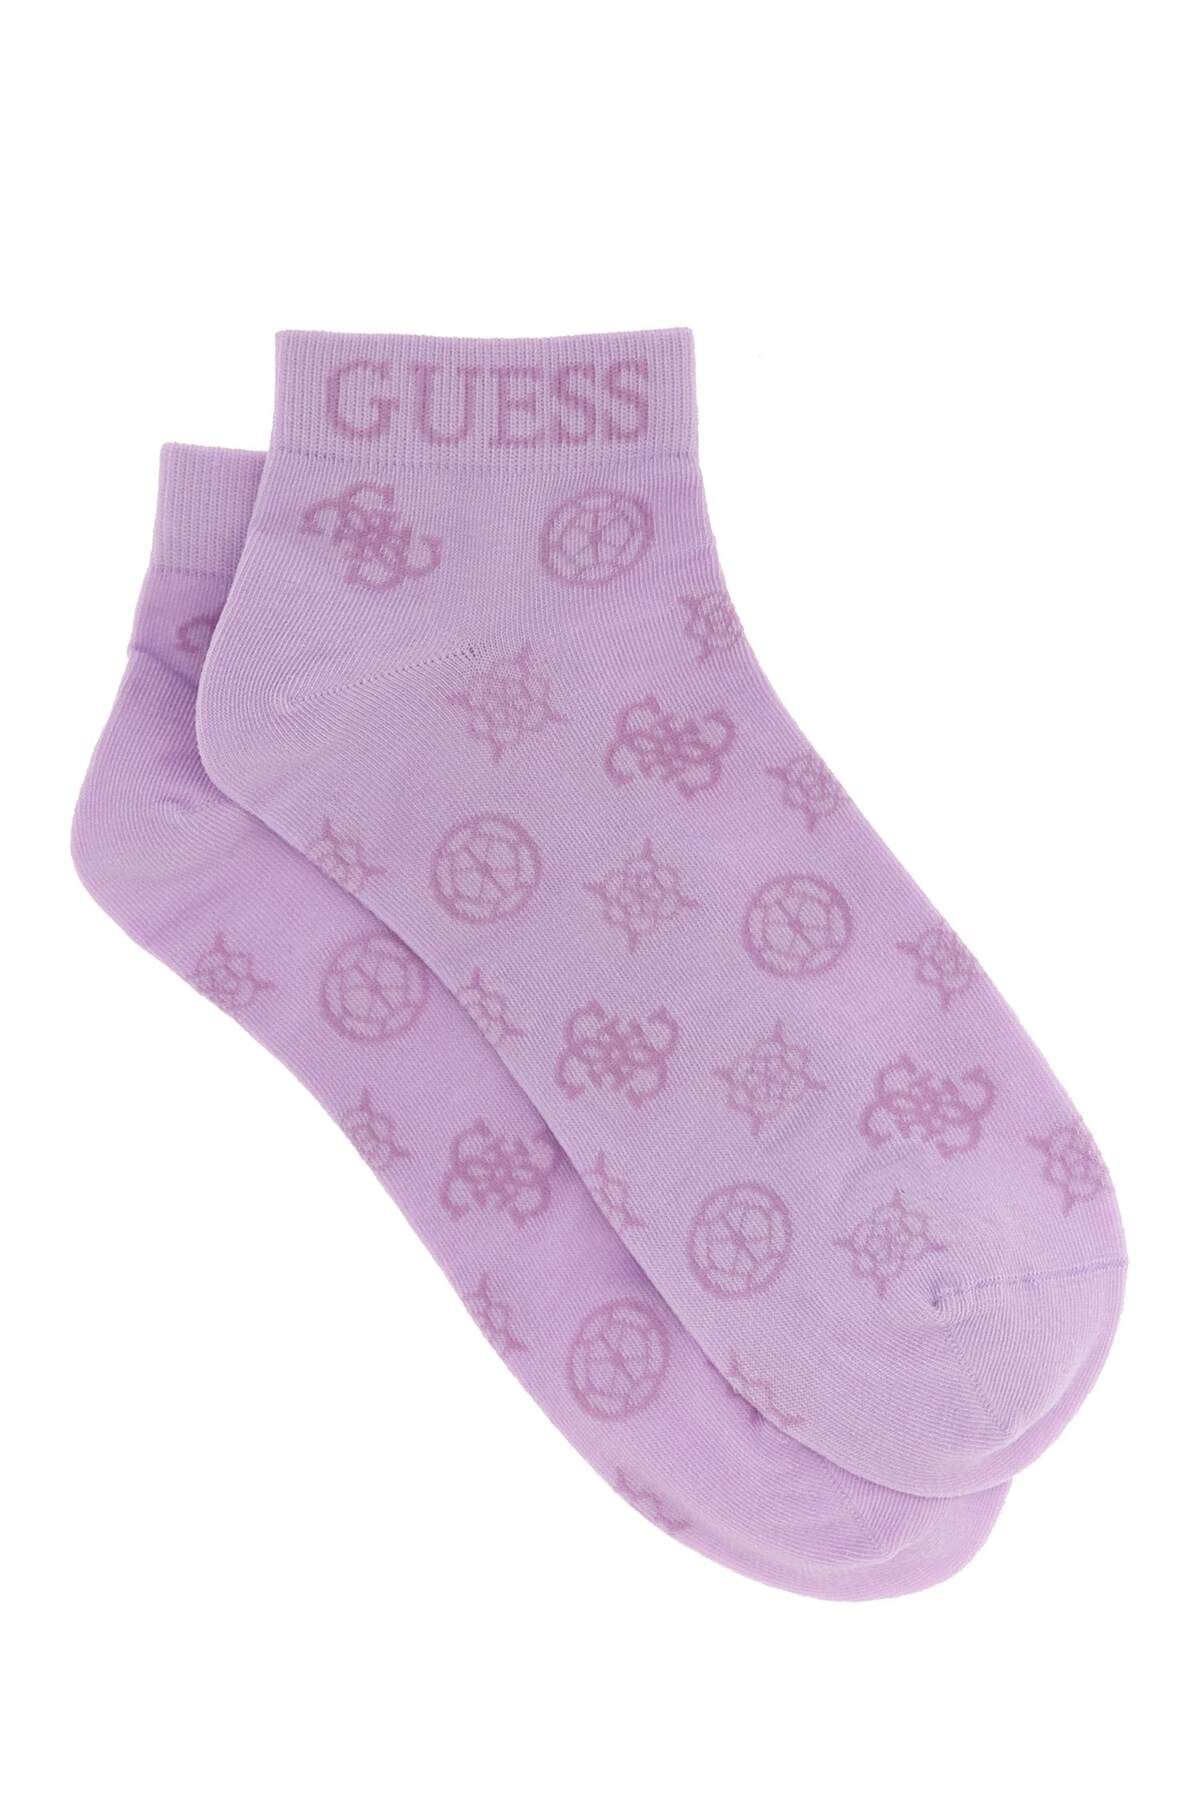 Guess Peony Kadın Aktif Çorap